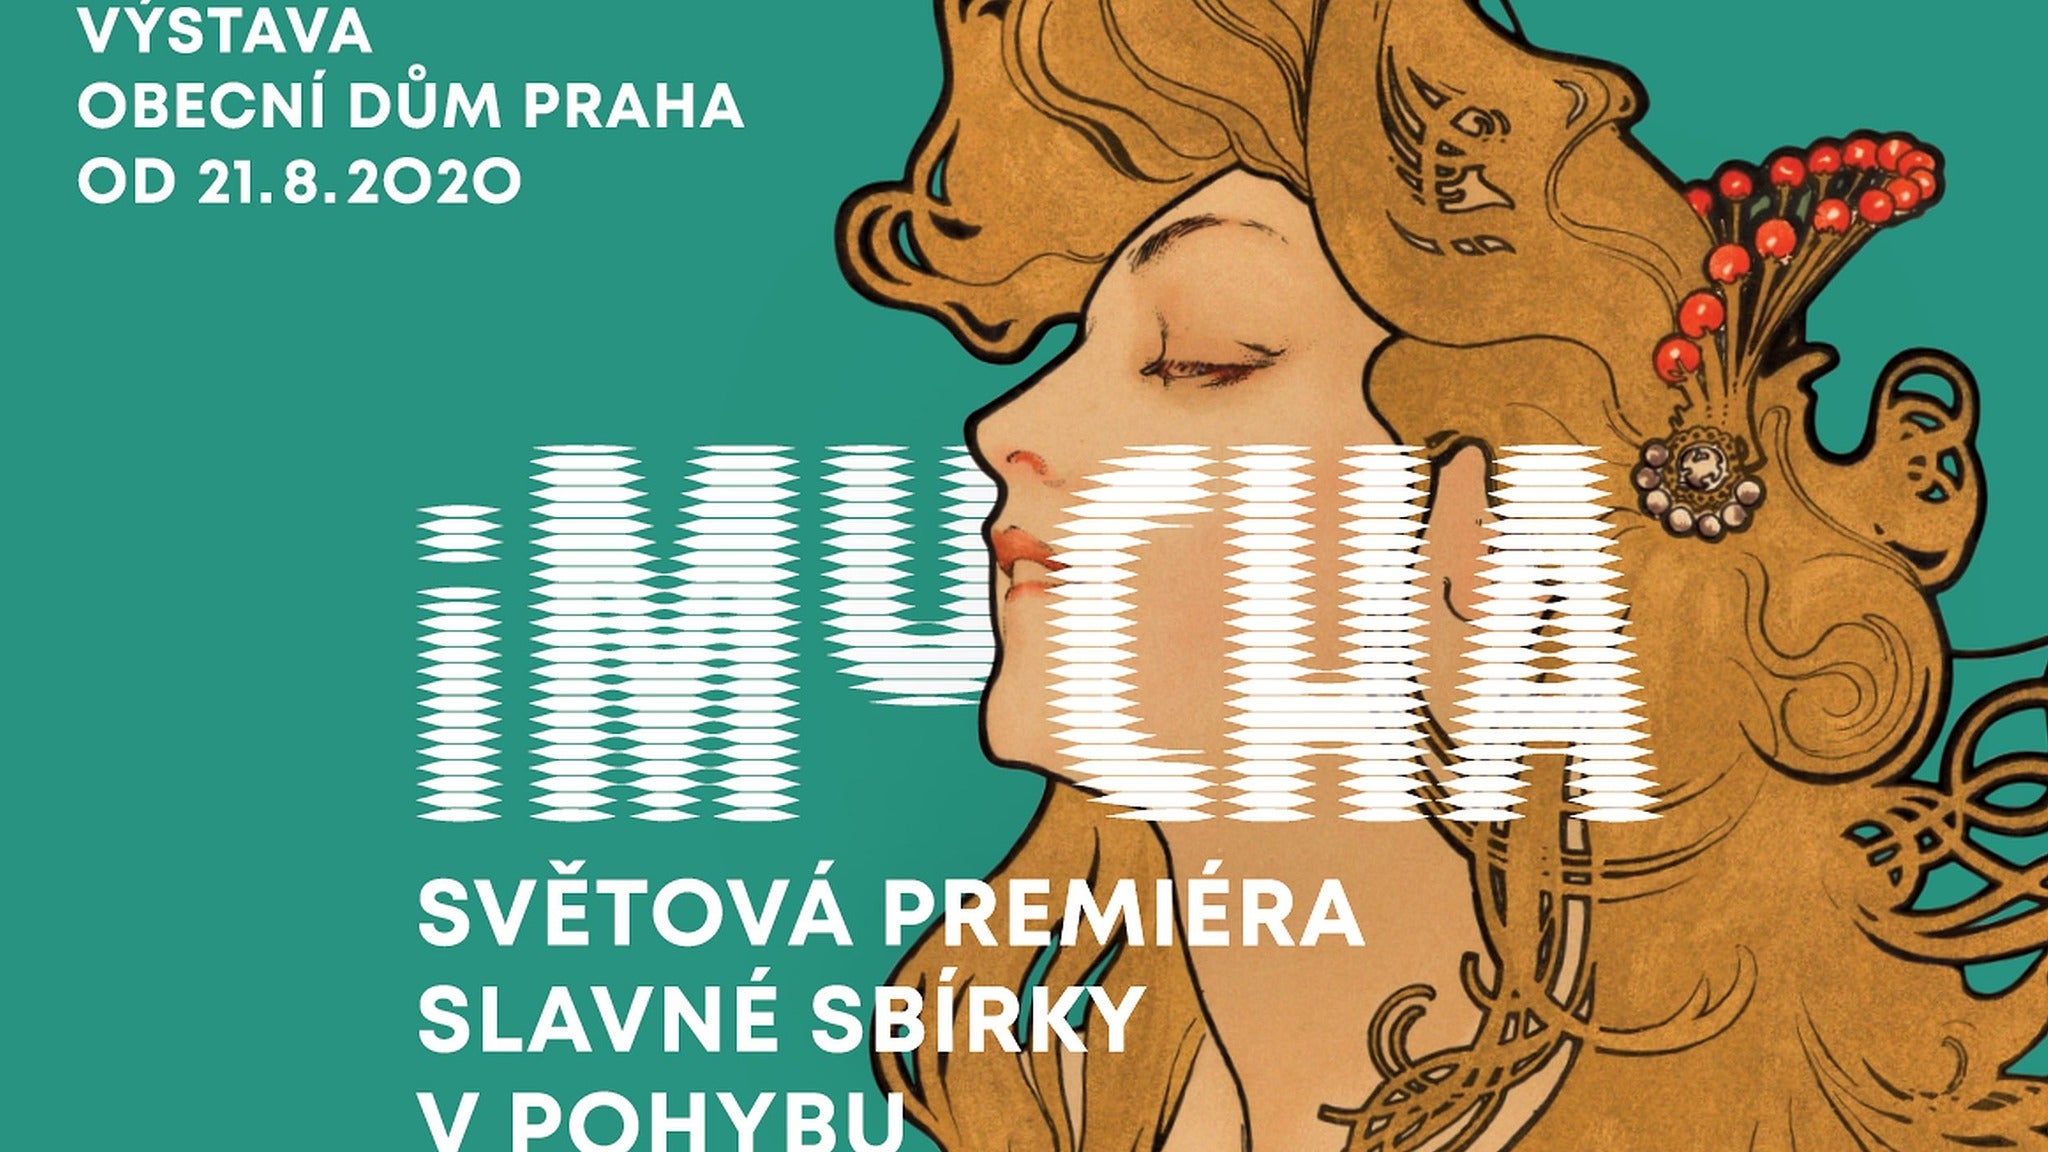 výstava iMucha- Praha -Obecní dům - Art Nouveau Hall Praha 1 náměstí Republiky 5, Praha 1 11000